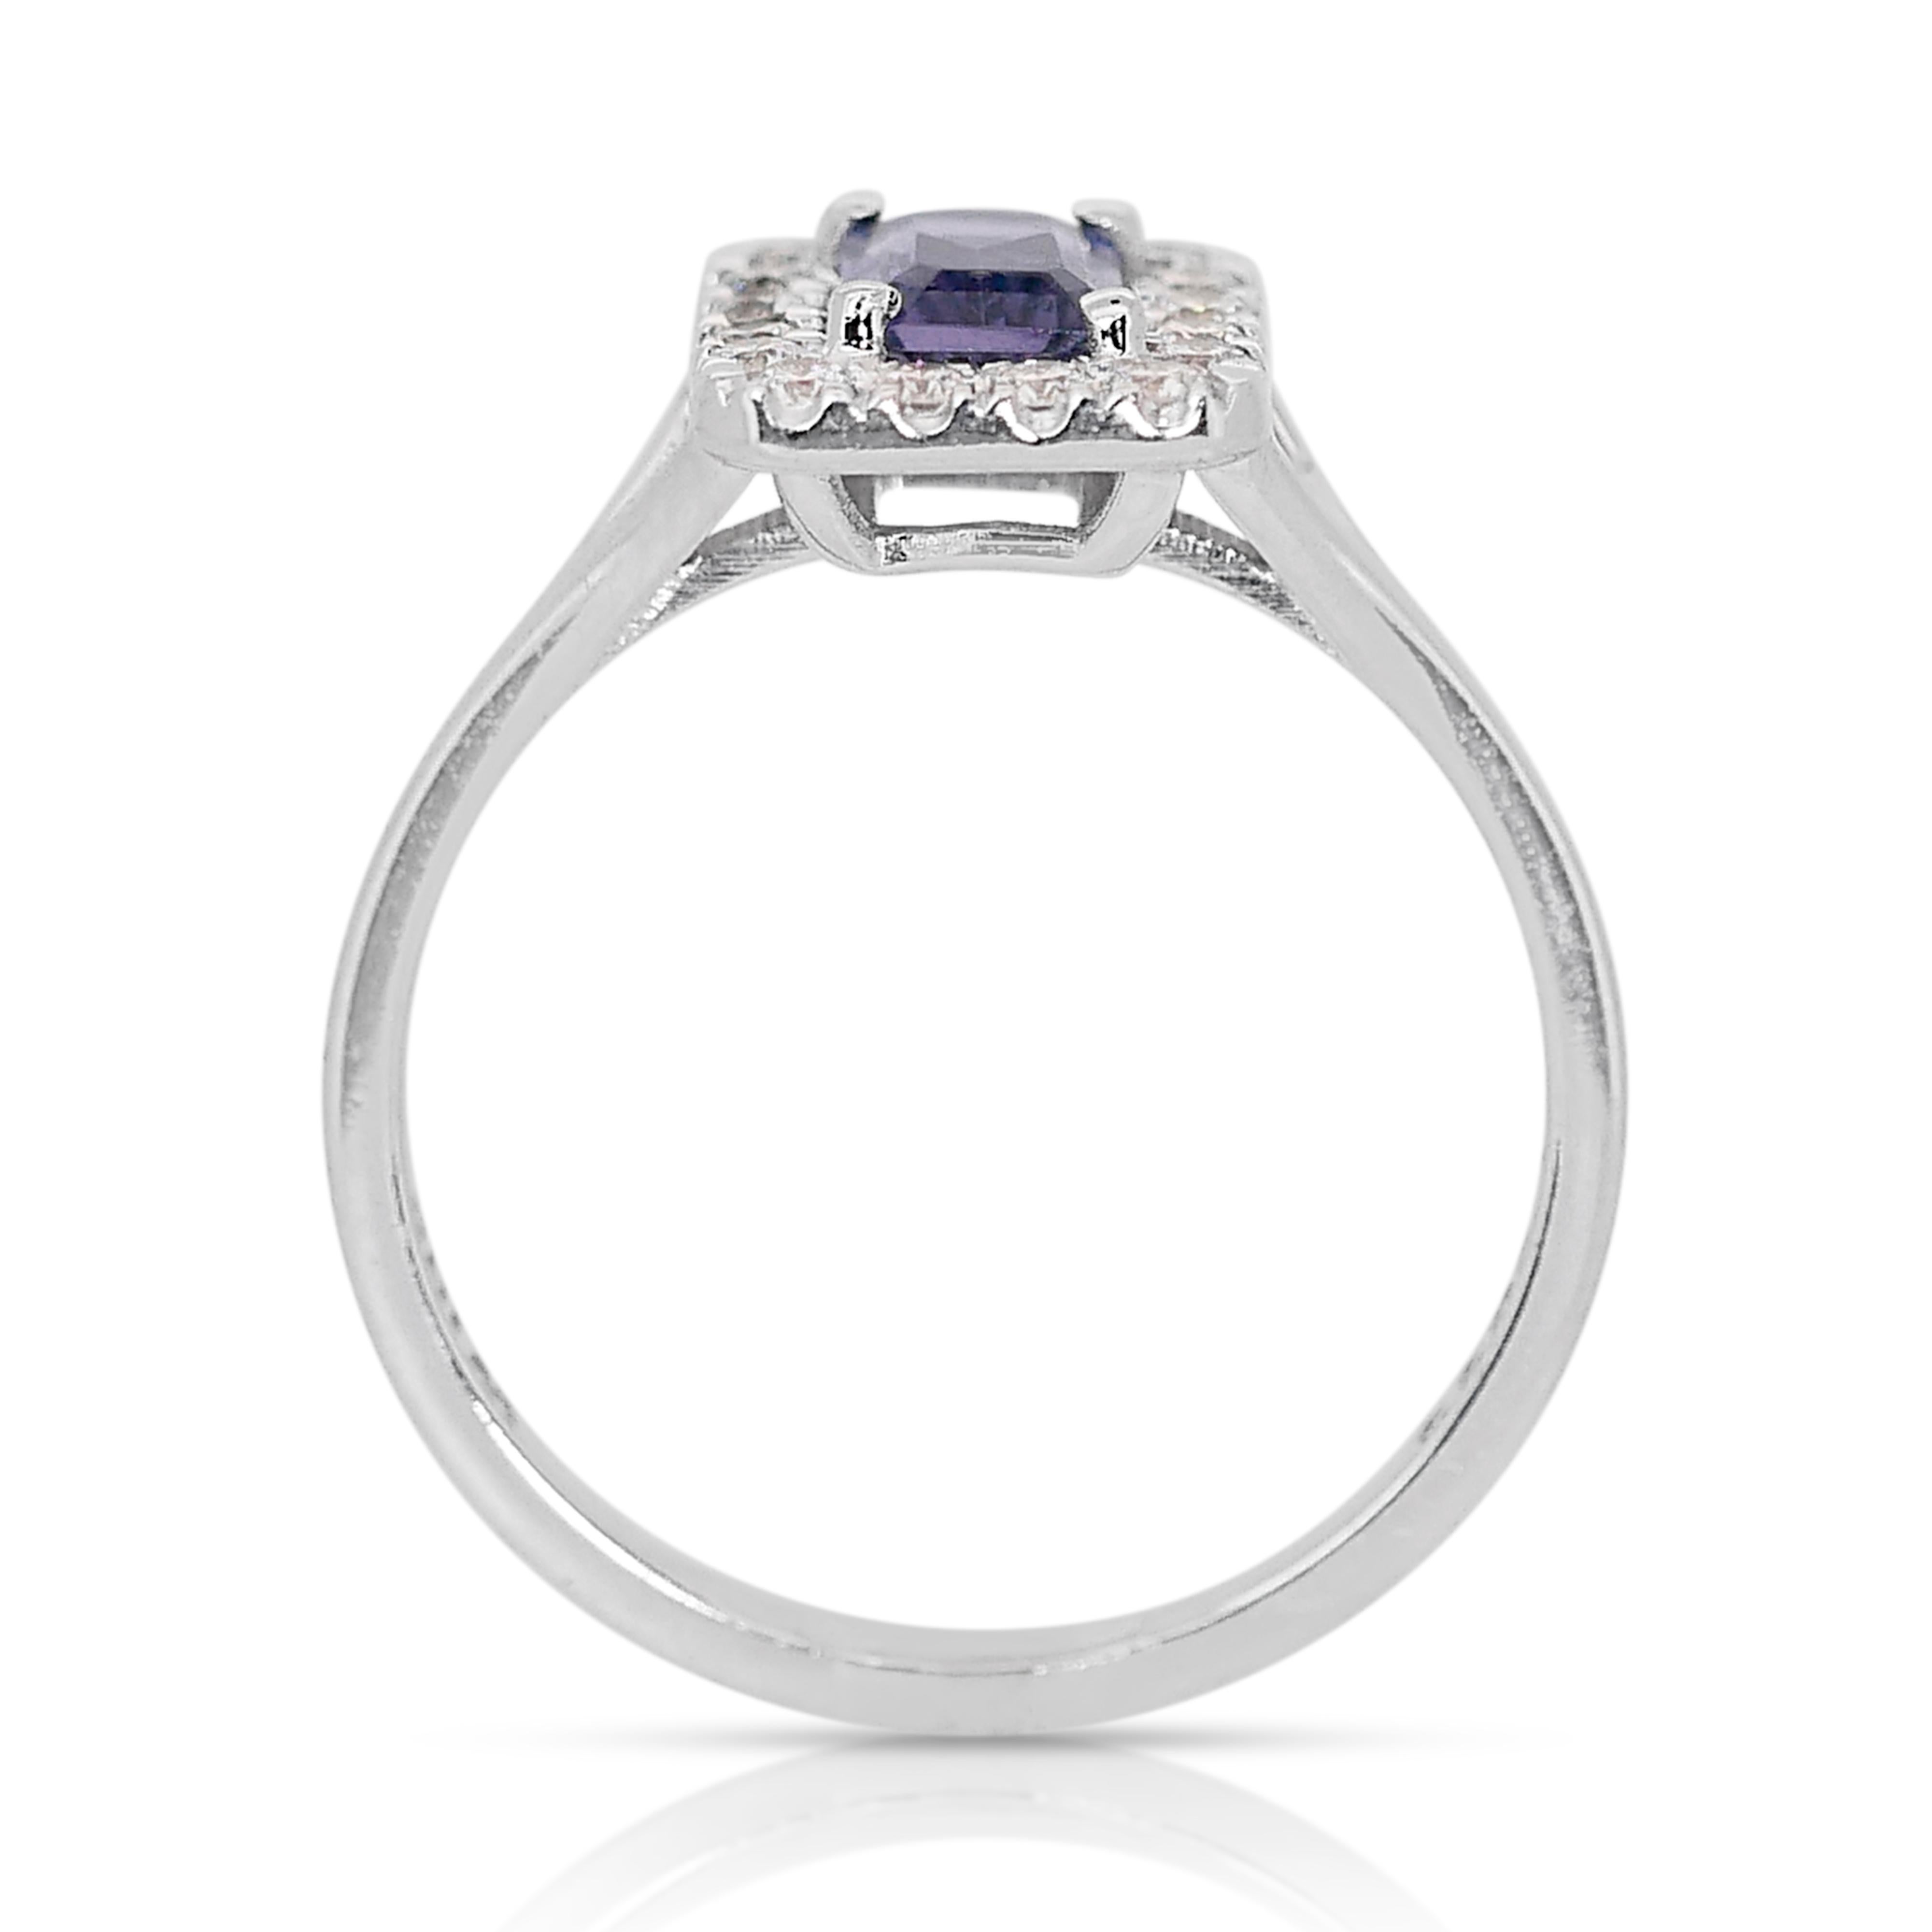 Enchanting 0.93ct Tanzanite and Diamonds Halo Ring in 18k White Gold - IGI  For Sale 1